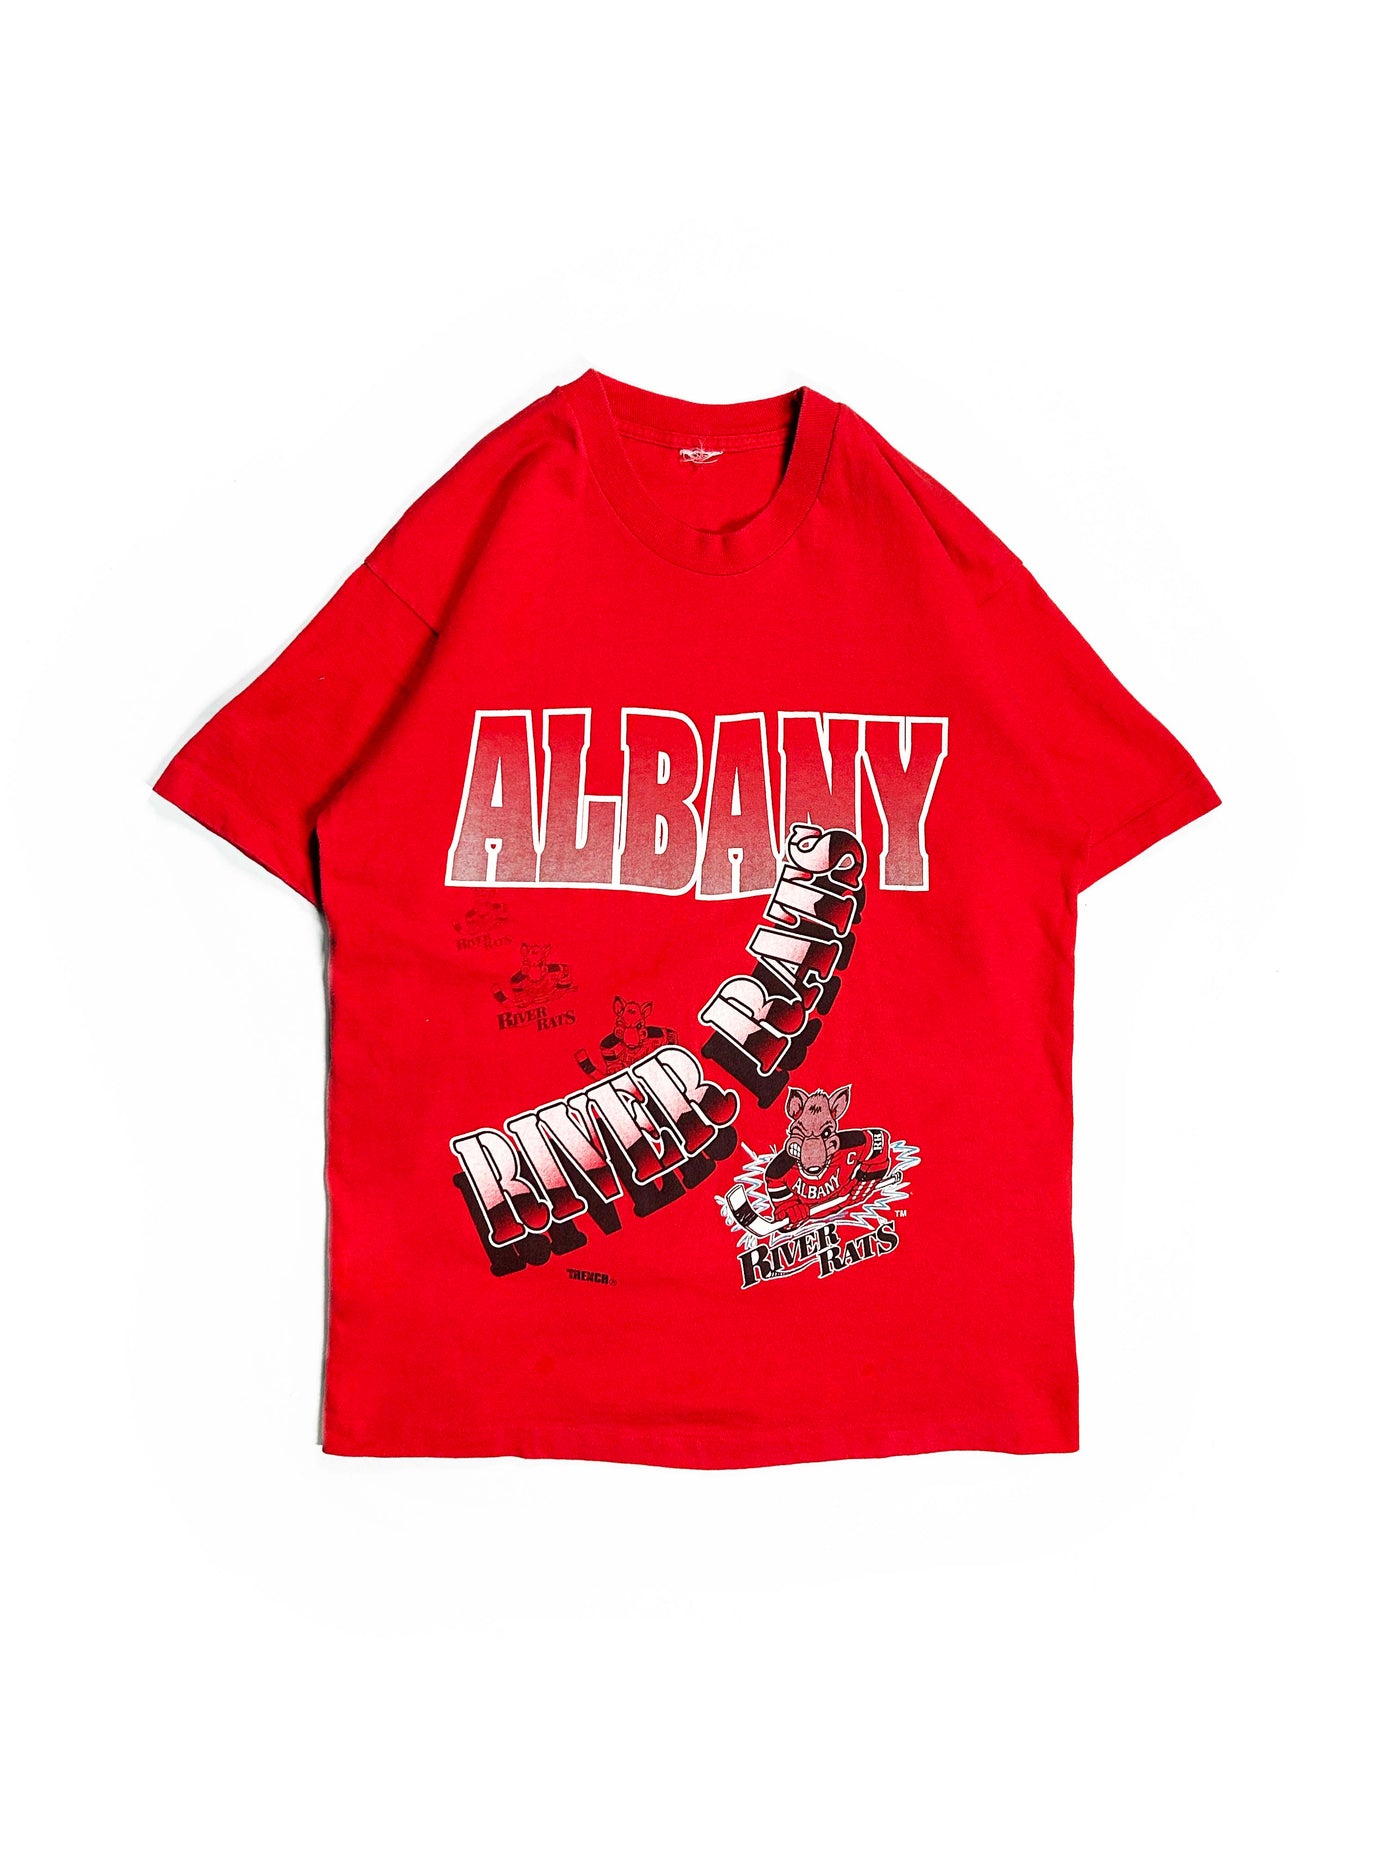 Vintage 90s Albany River Rats T-Shirt